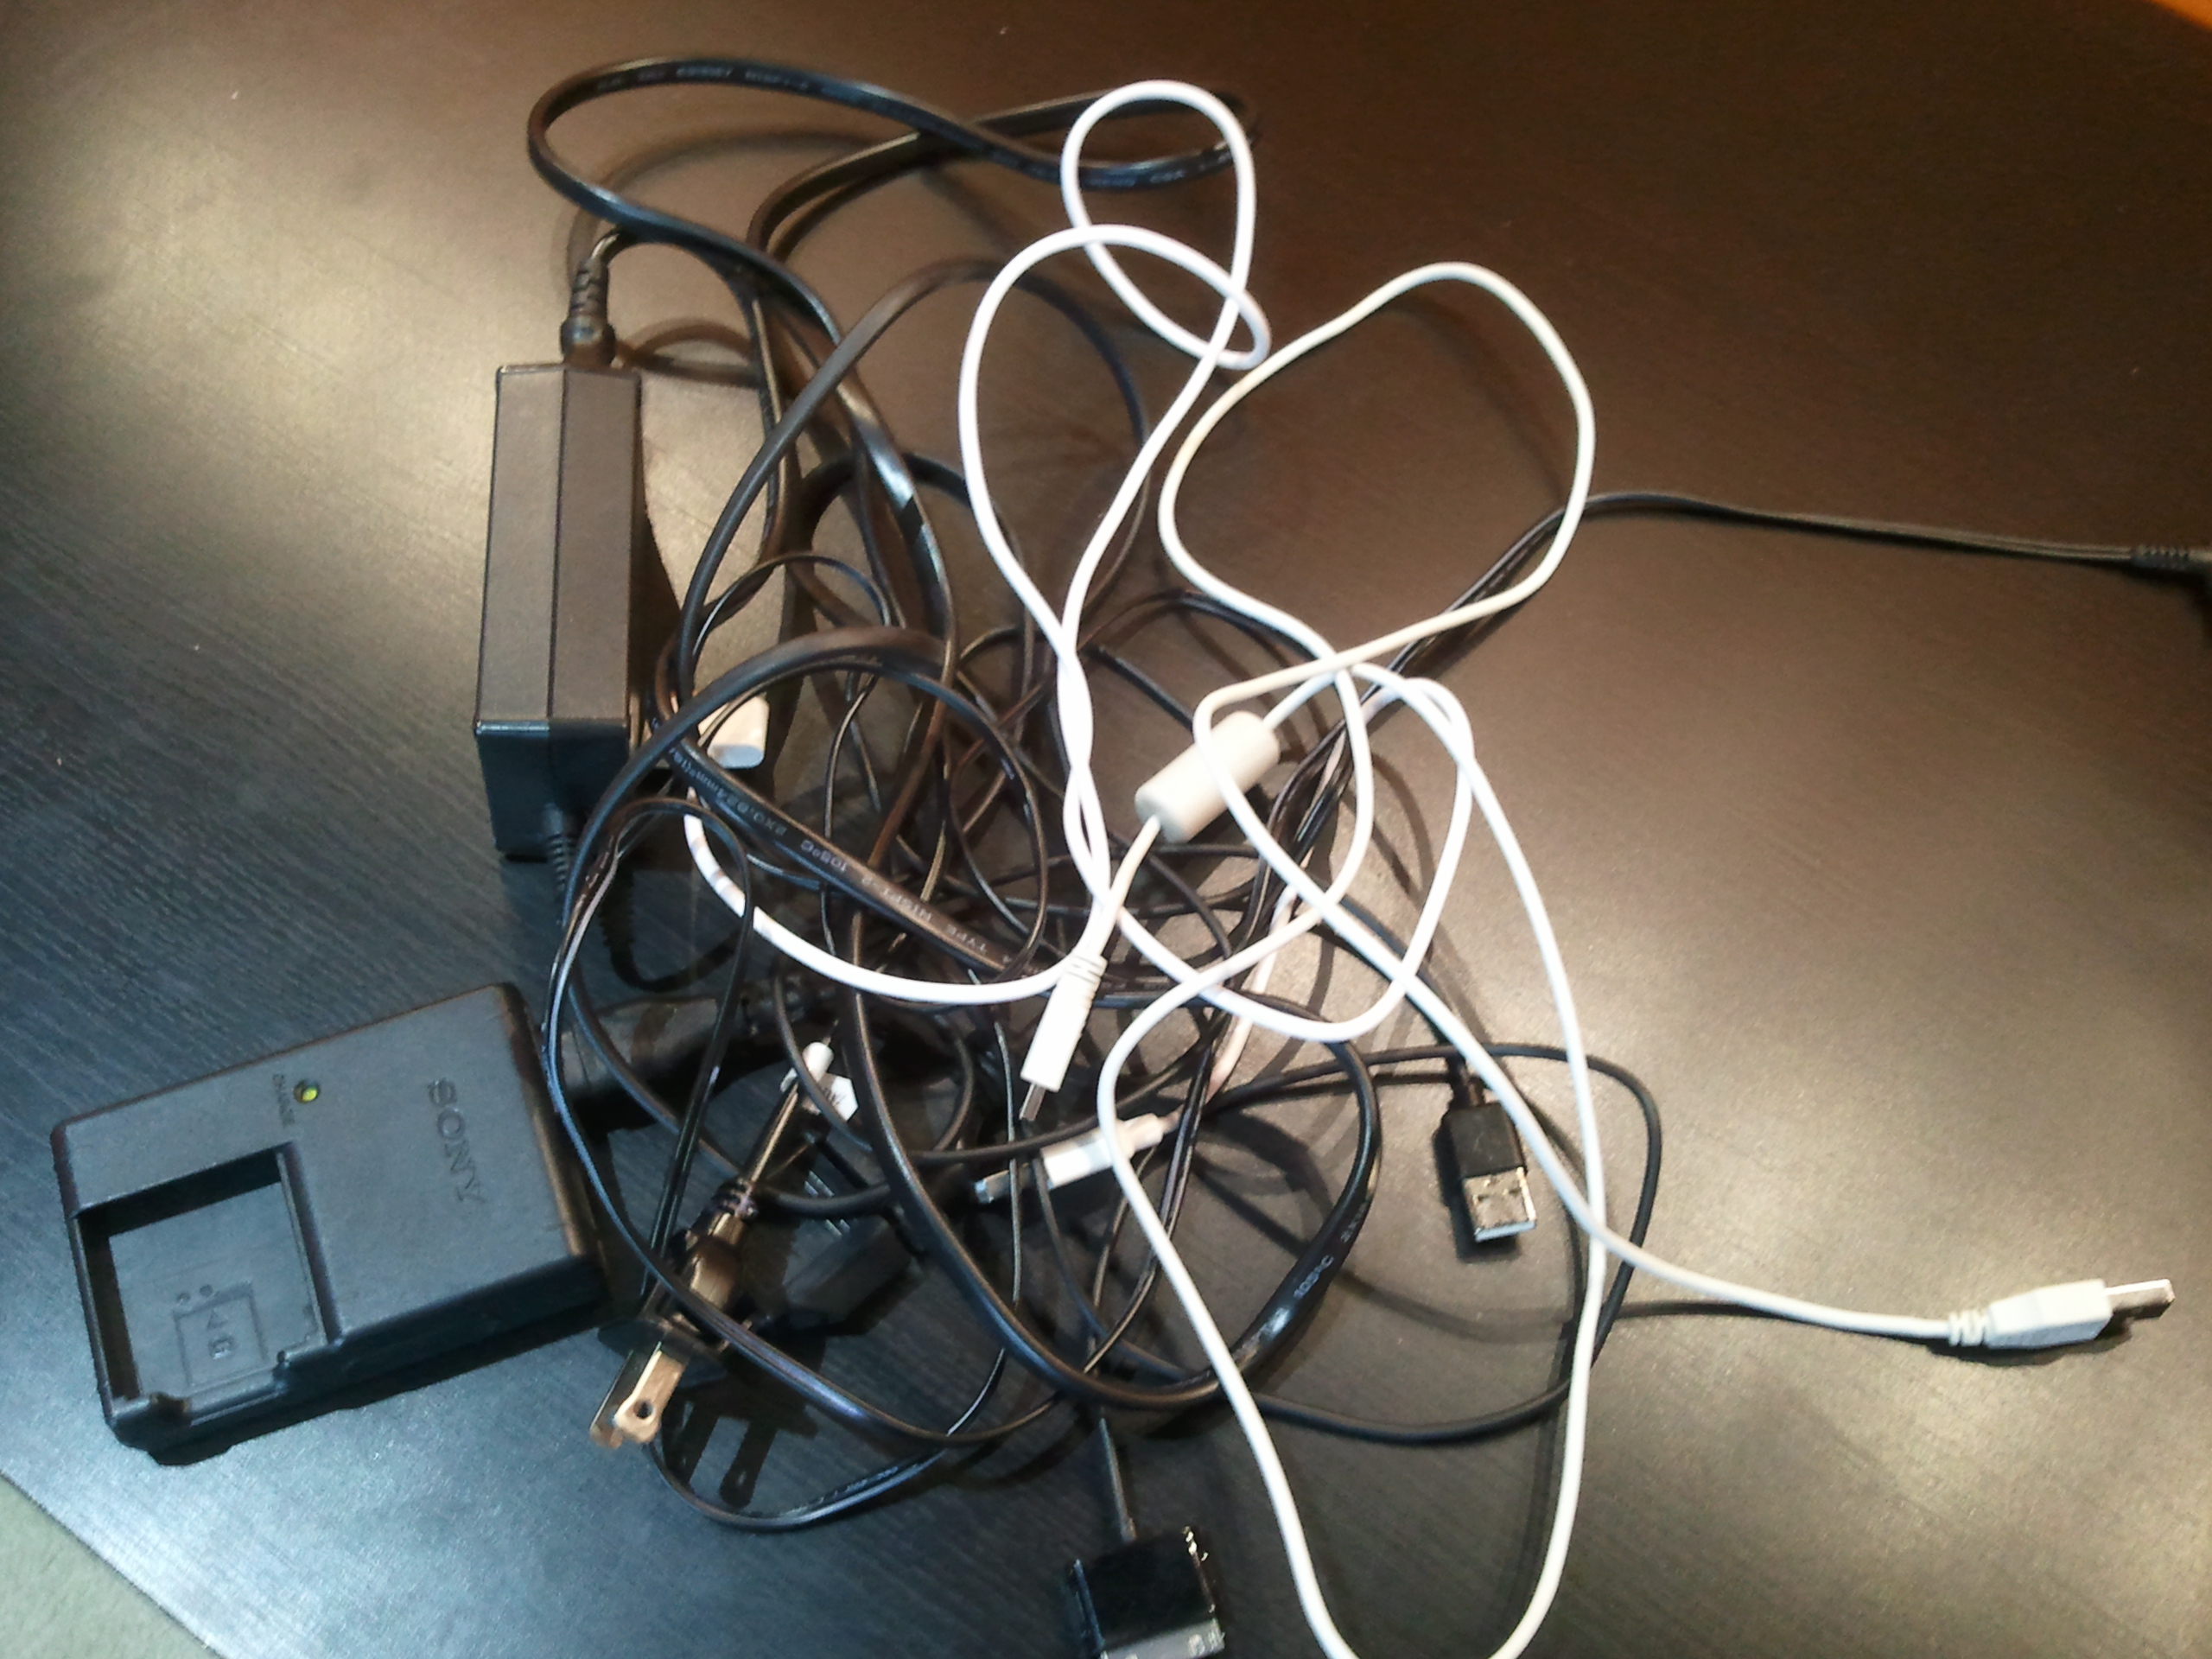 Organize those cords